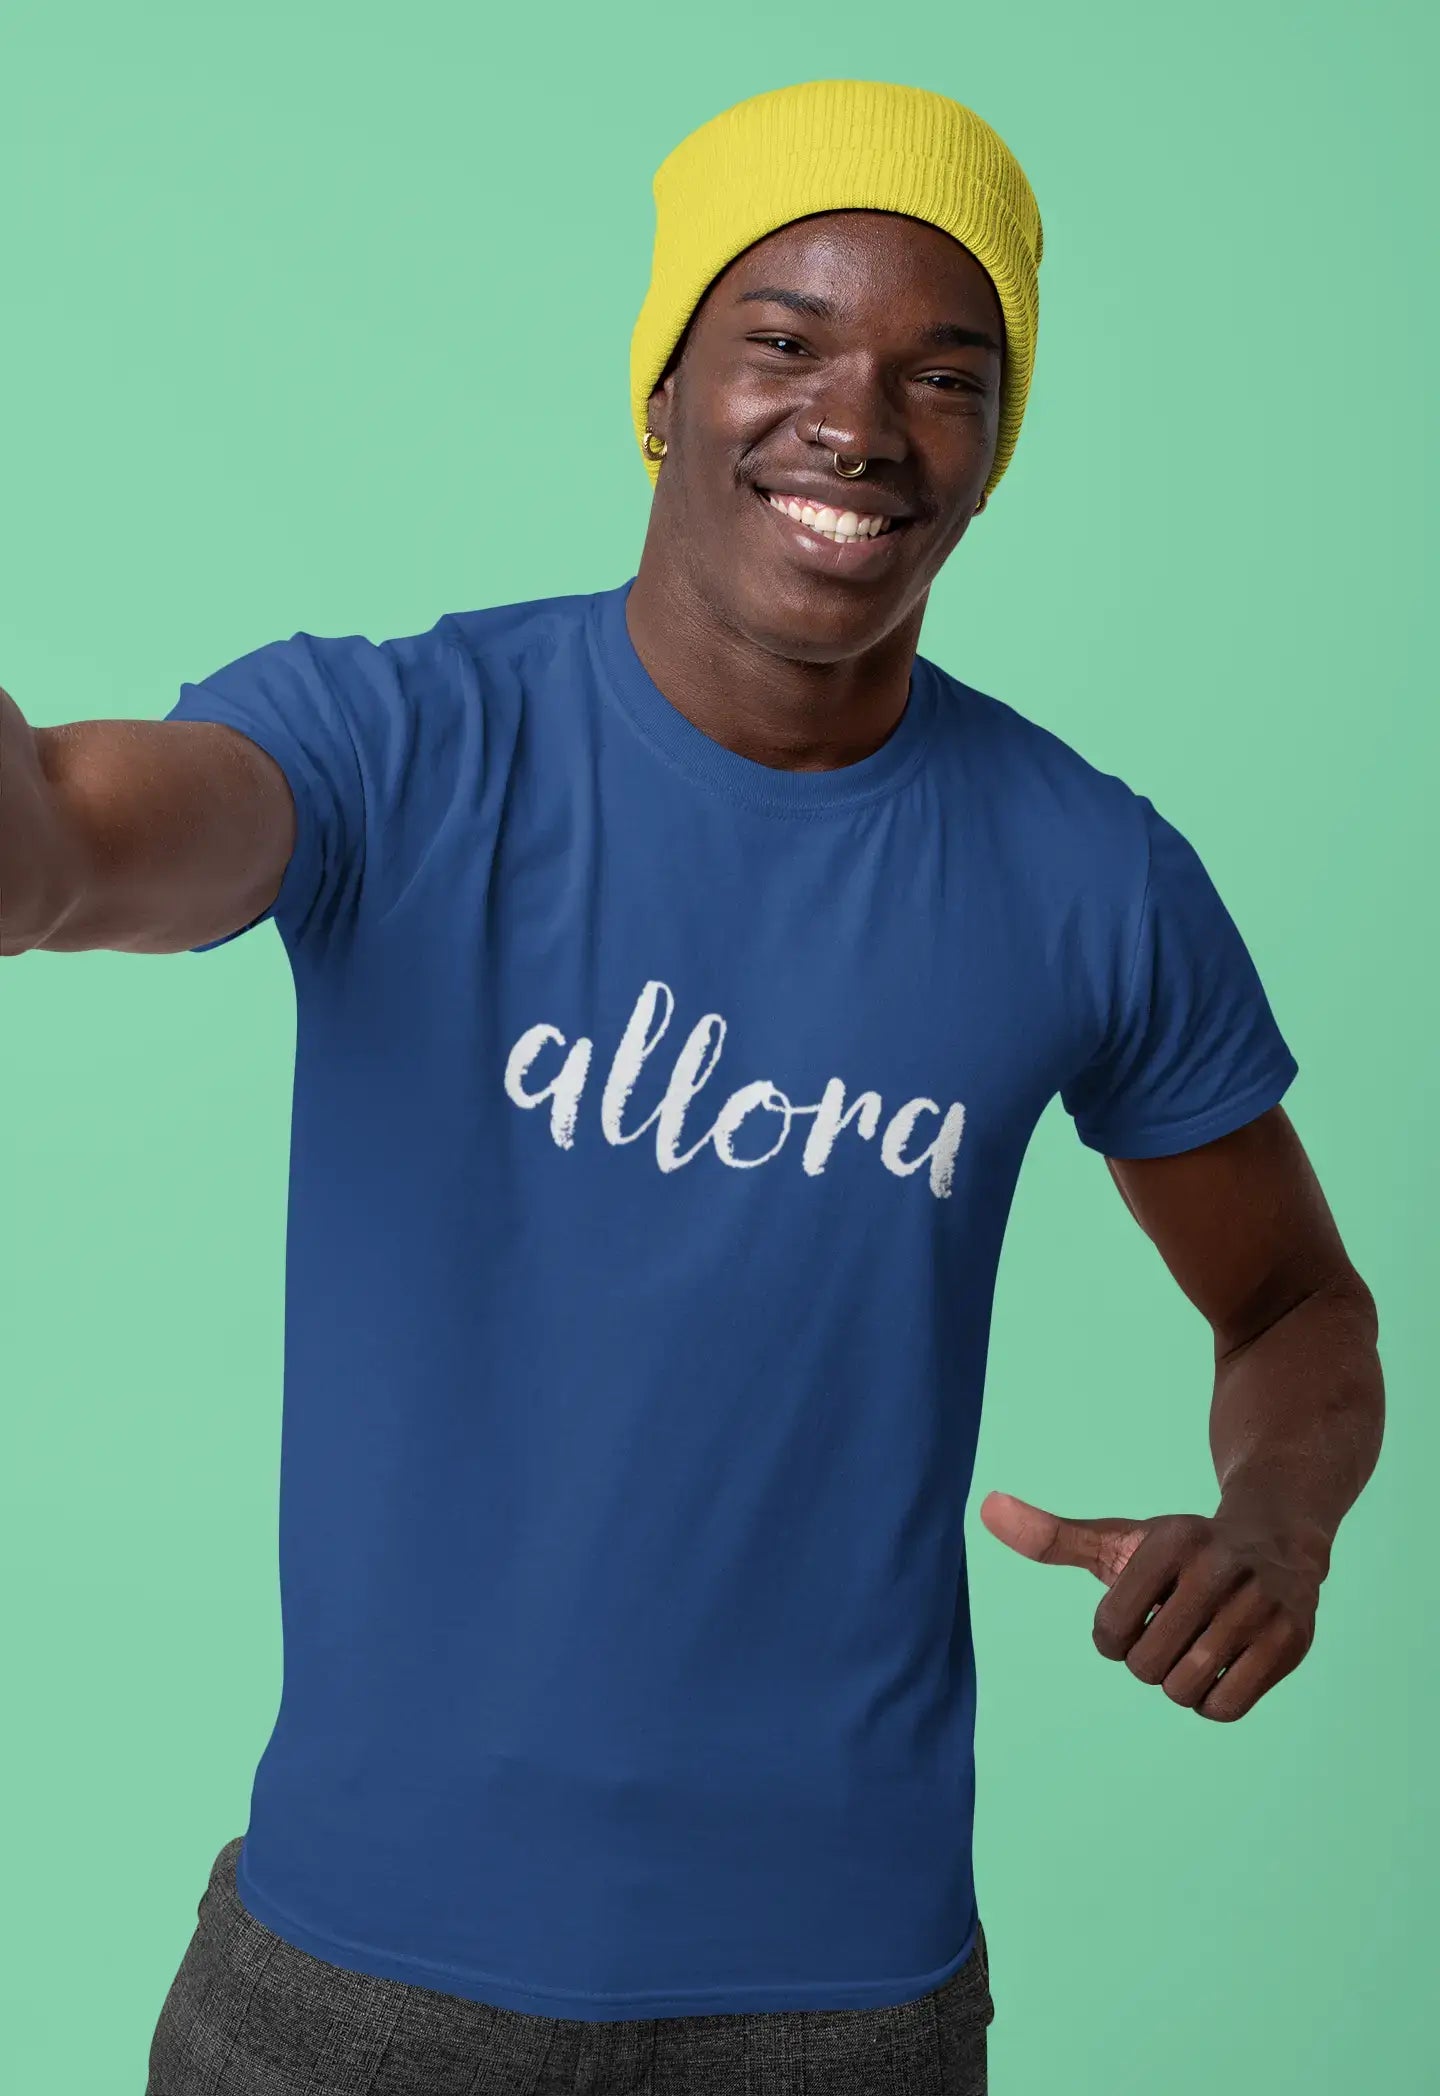 ULTRABASIC - Graphic Printed Men's Allora T-Shirt Military Green